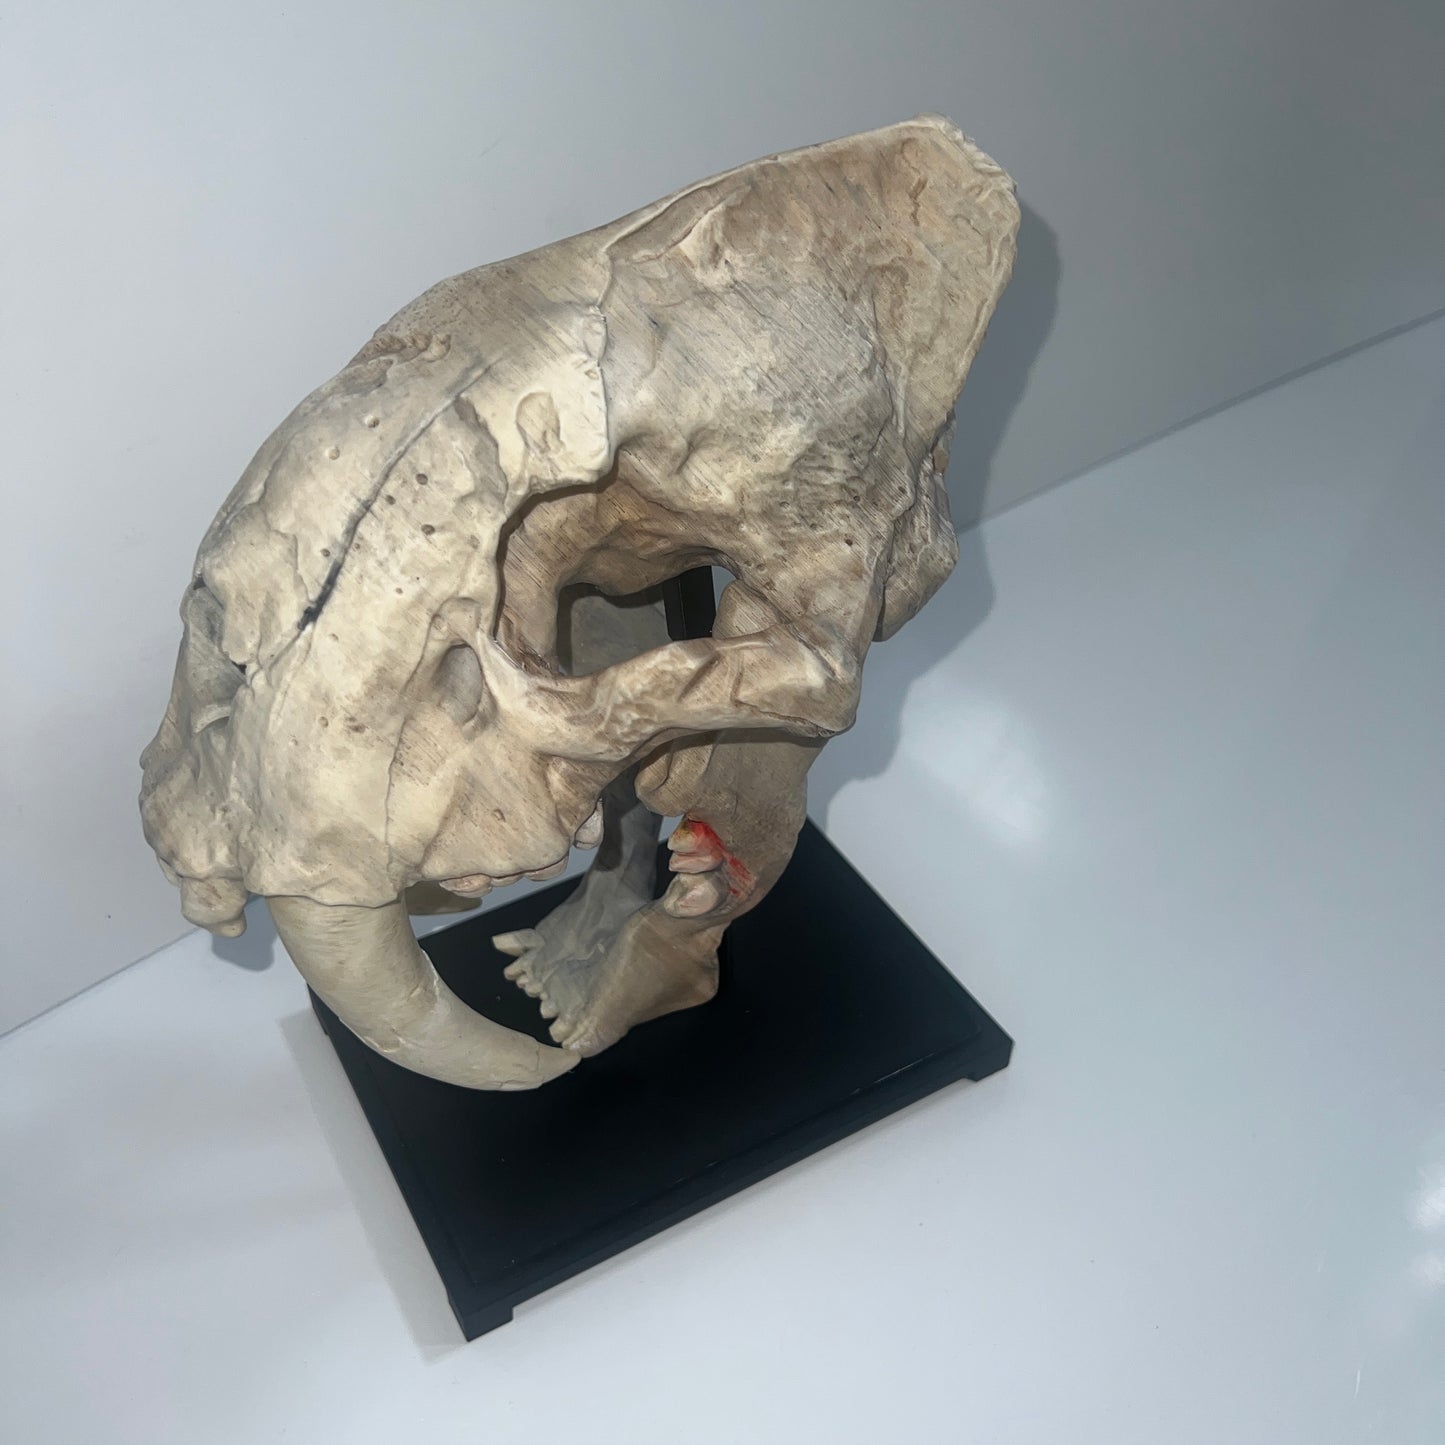 Saber tooth Cat (Smilodon) - 3D Printed